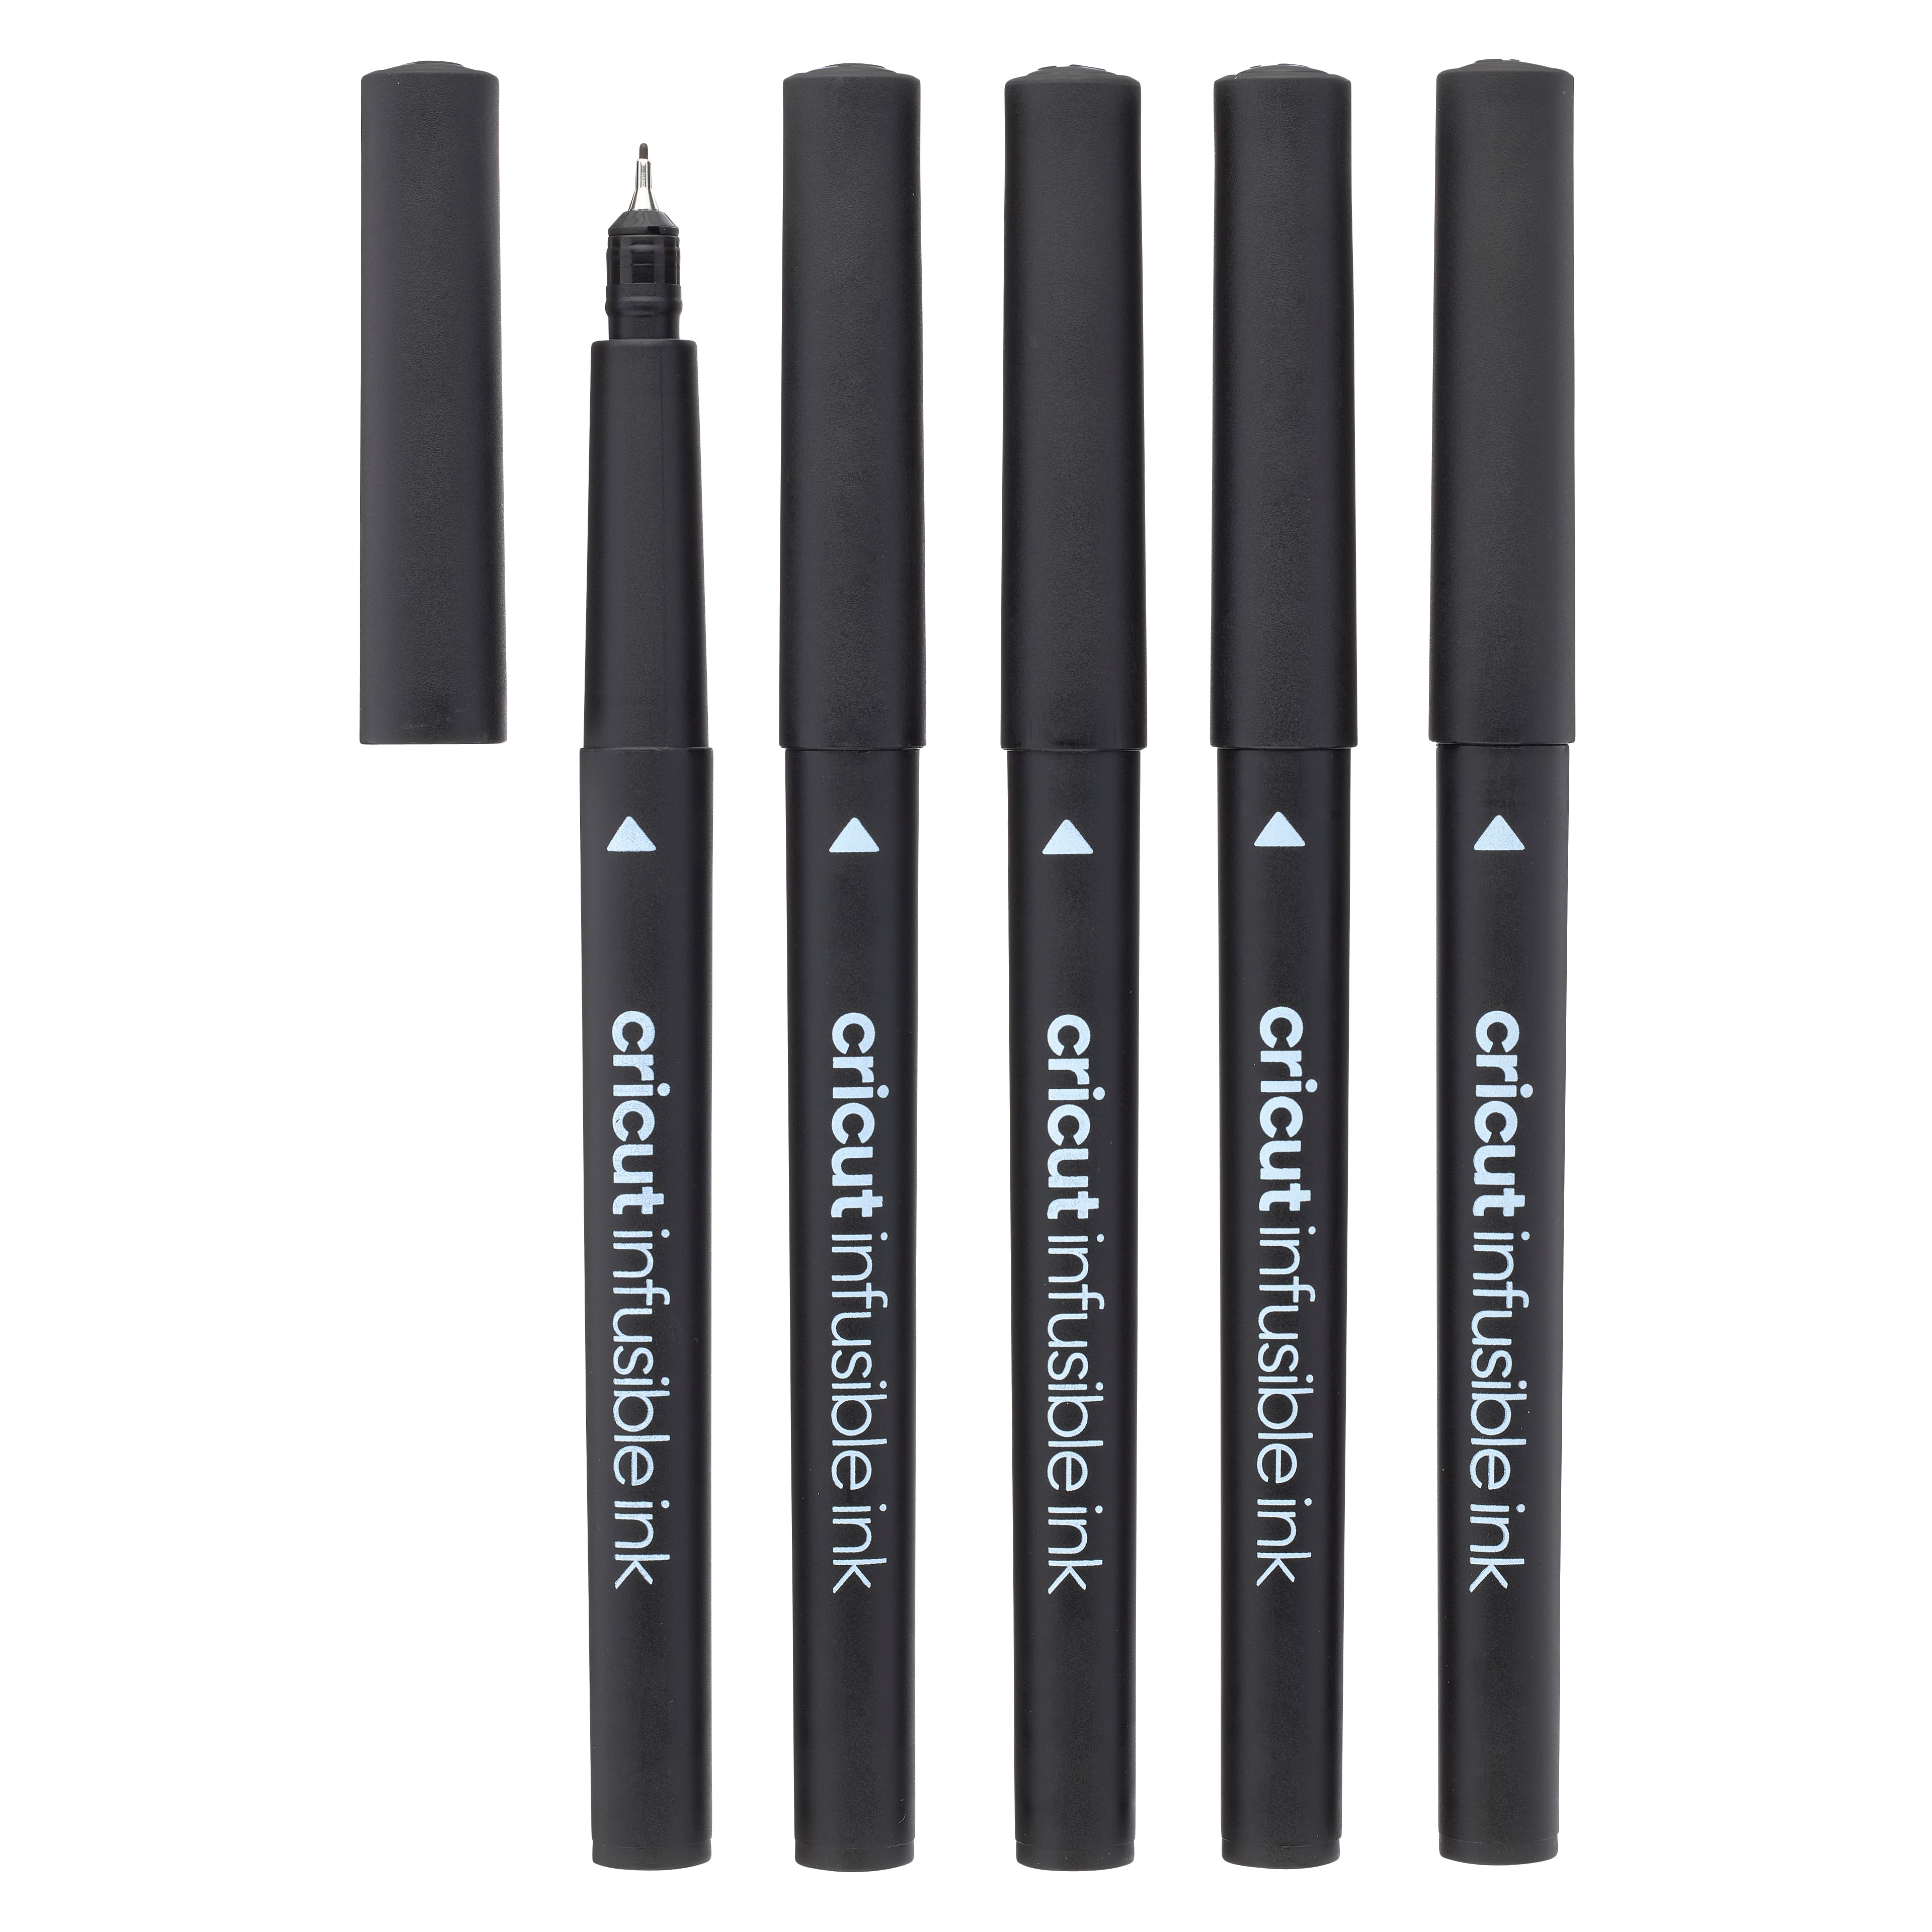  Cricut Explore One Accessory Adapter and Pen, Black